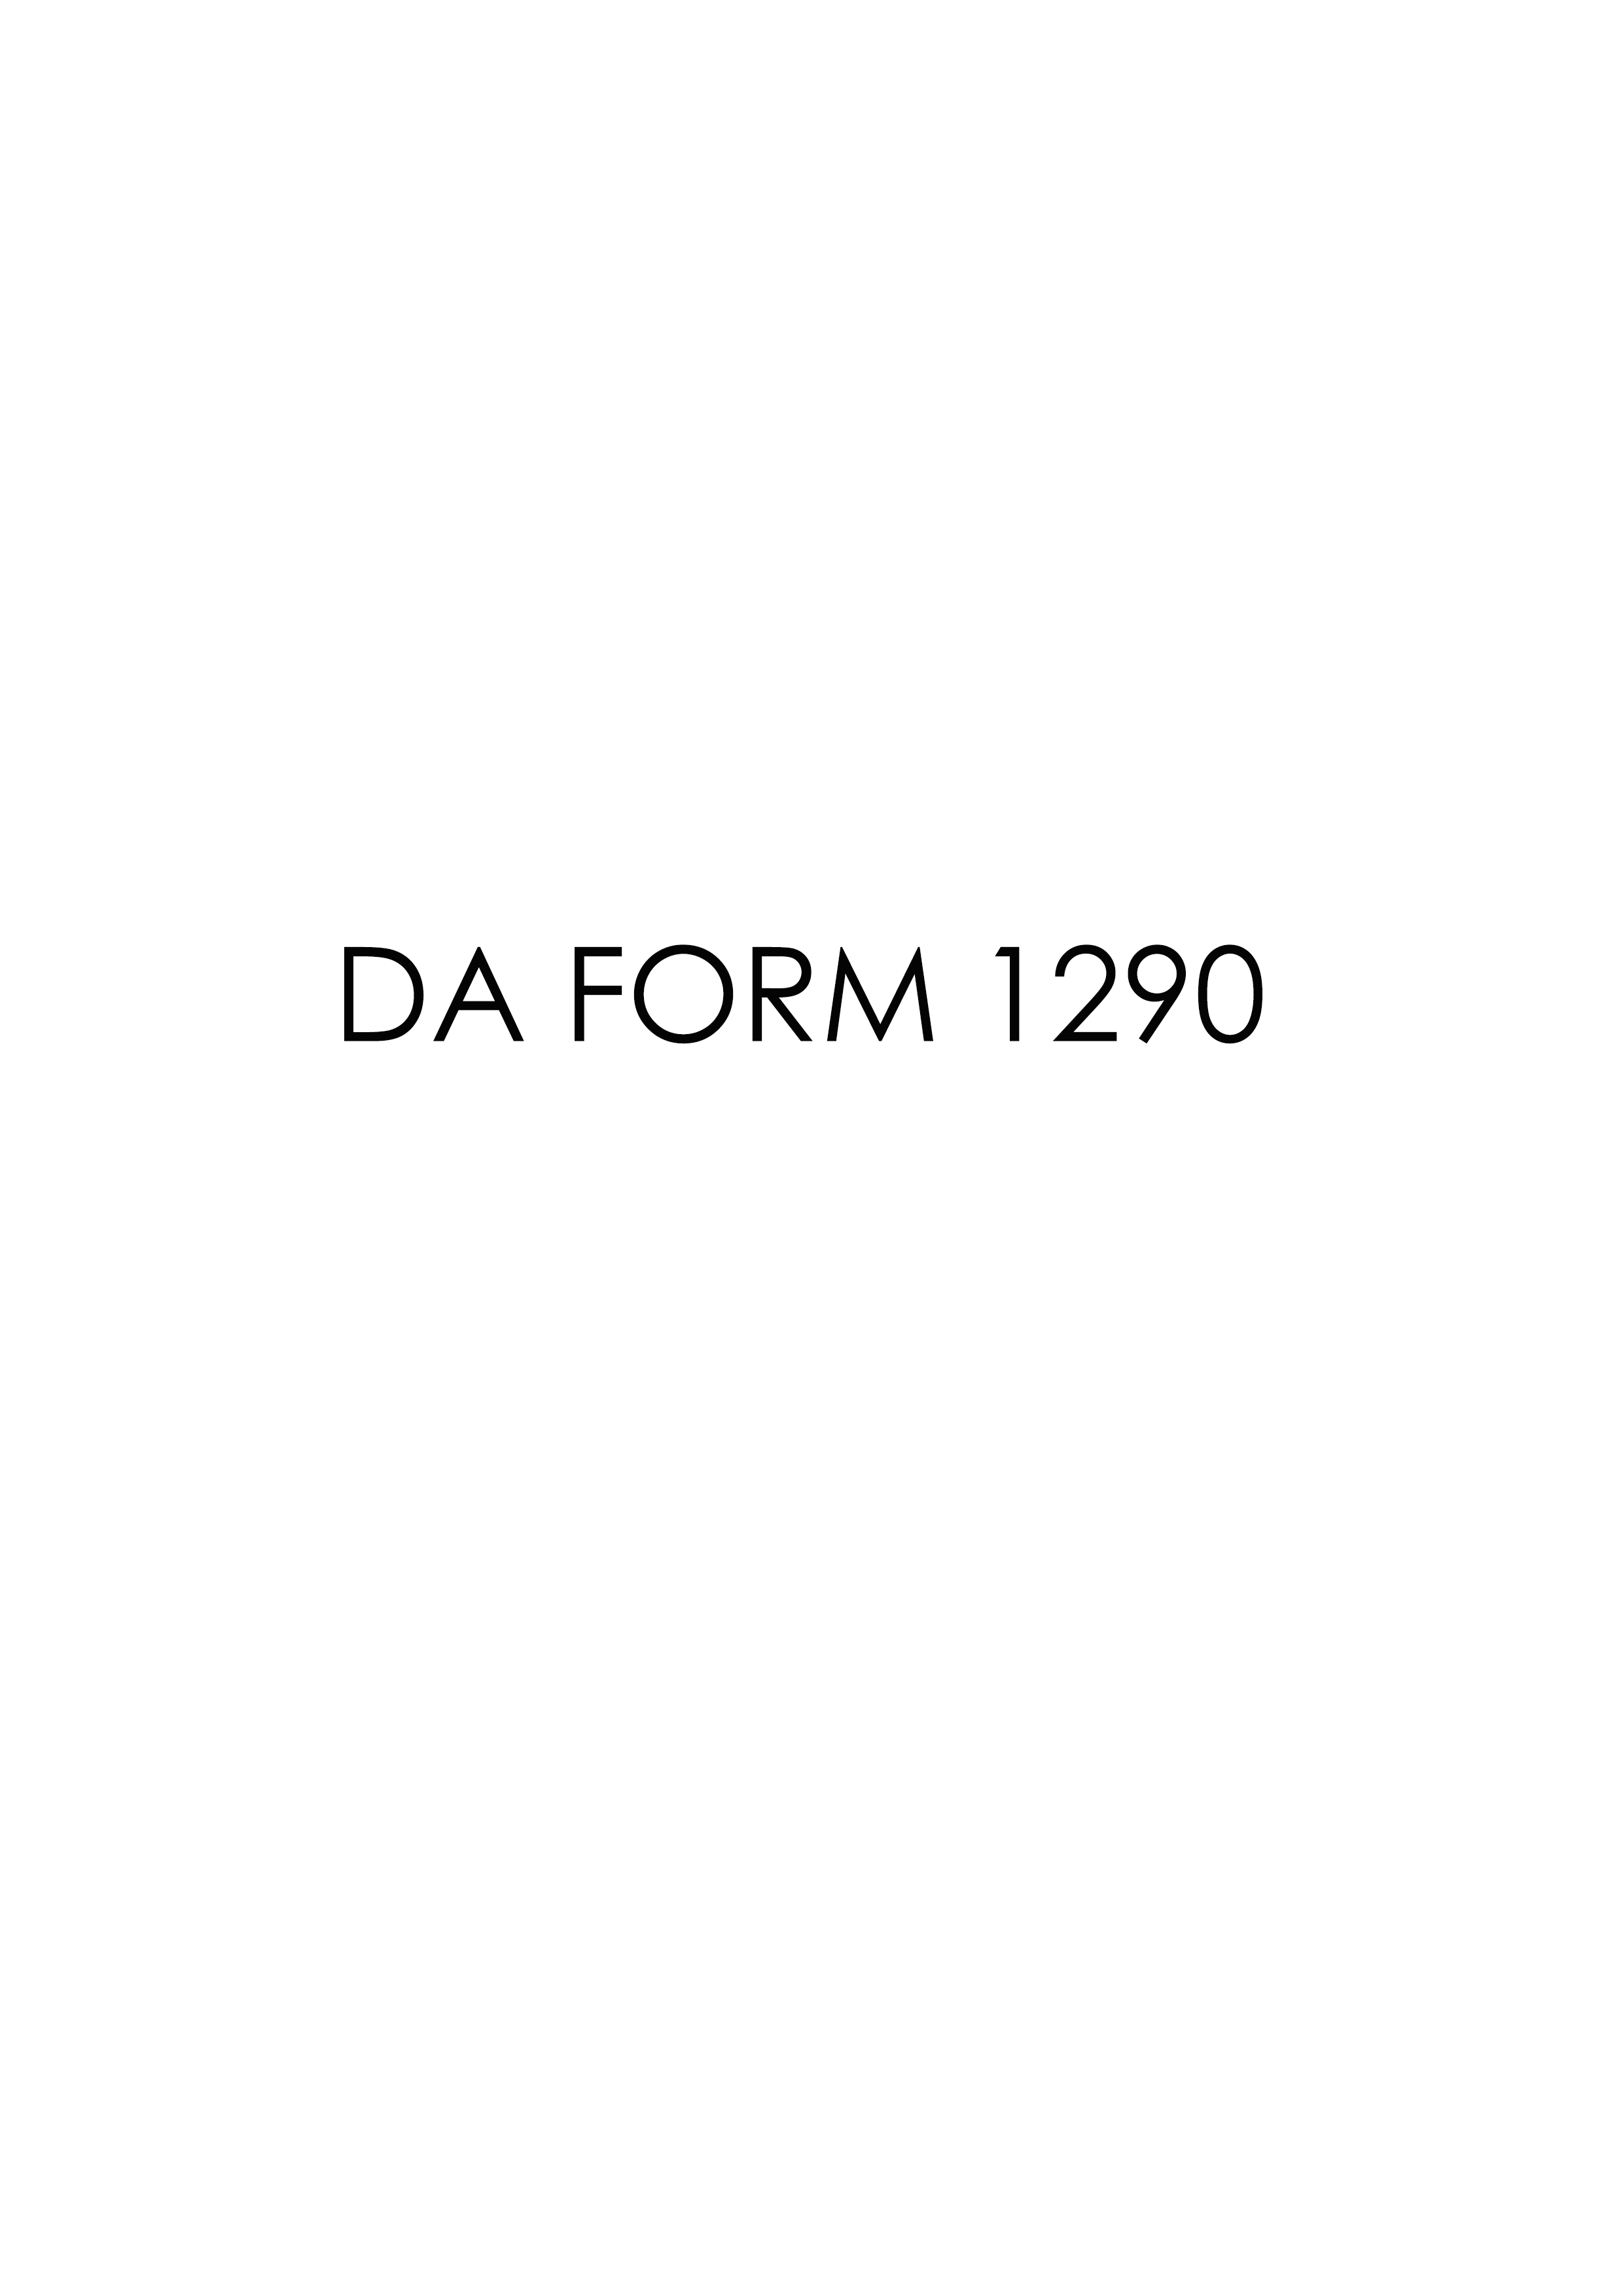 Download da 1290 Form Free